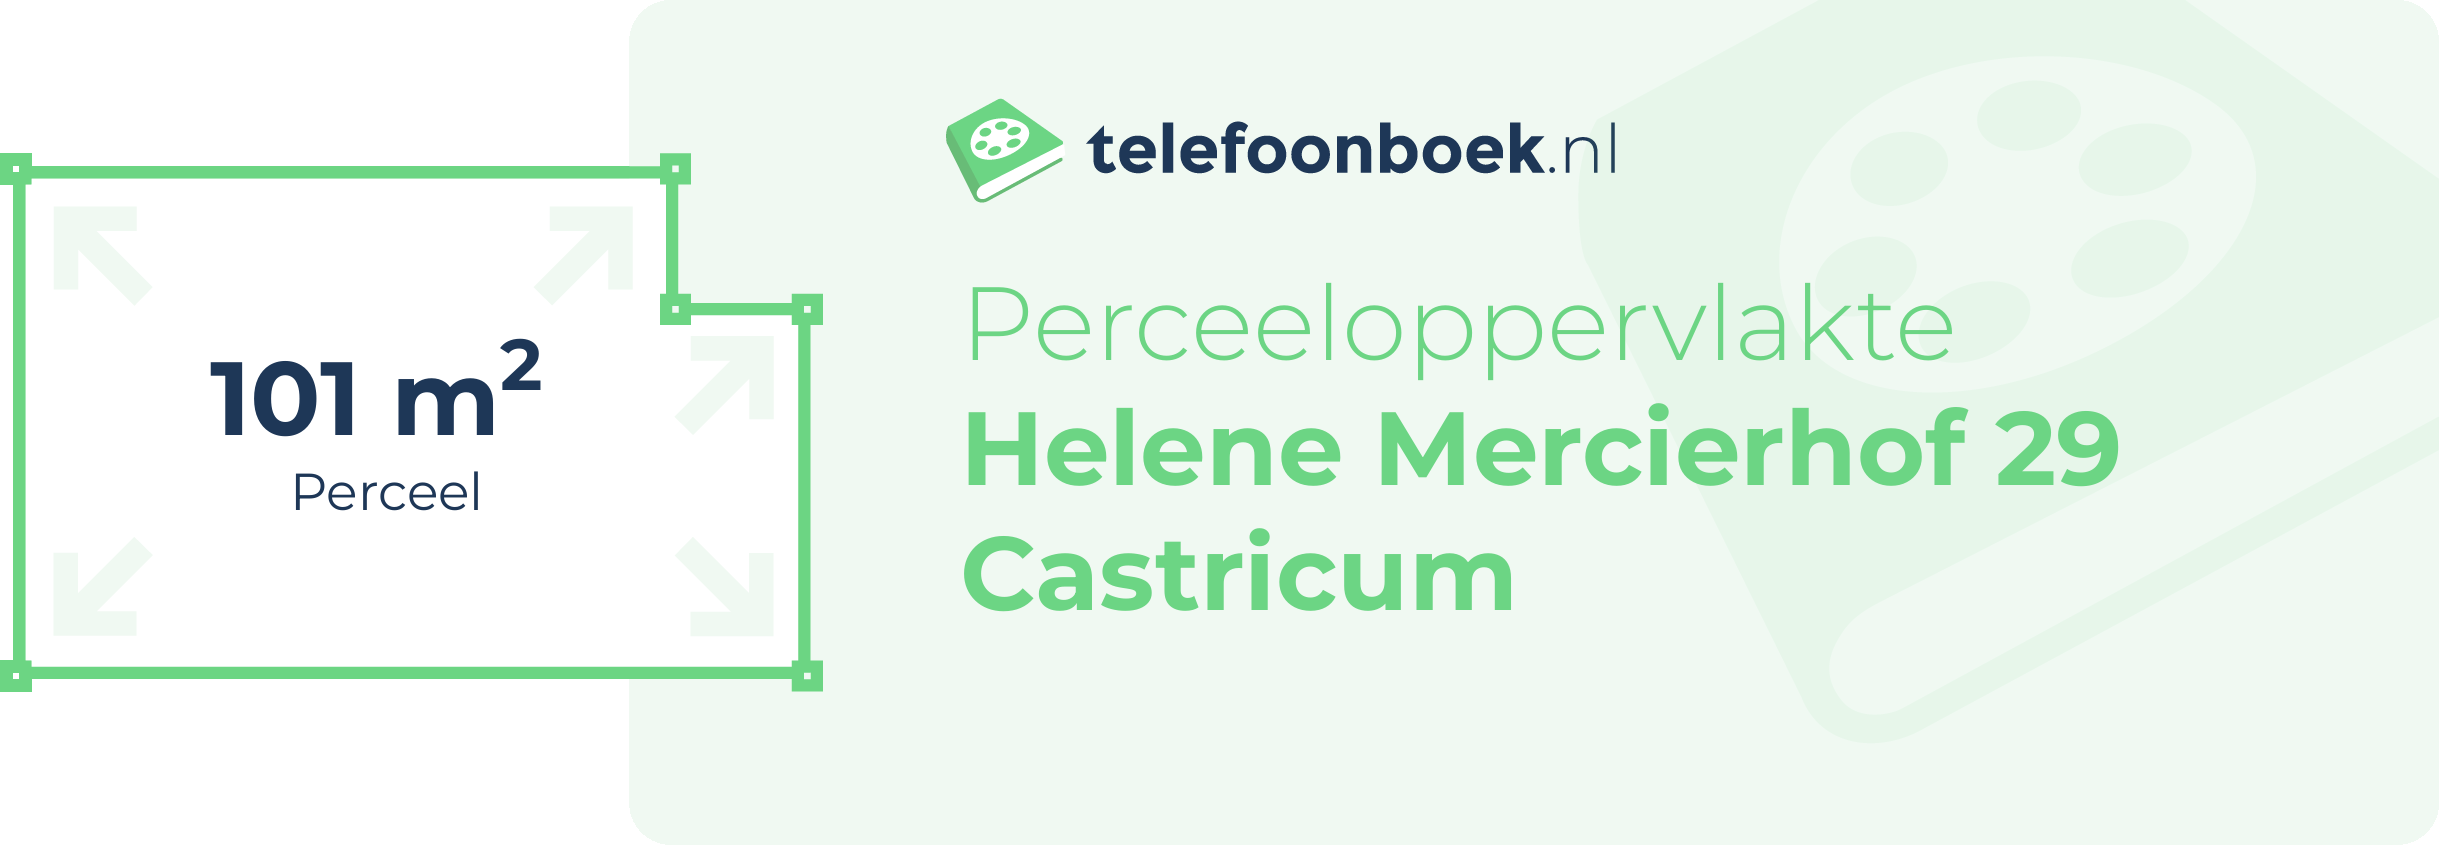 Perceeloppervlakte Helene Mercierhof 29 Castricum